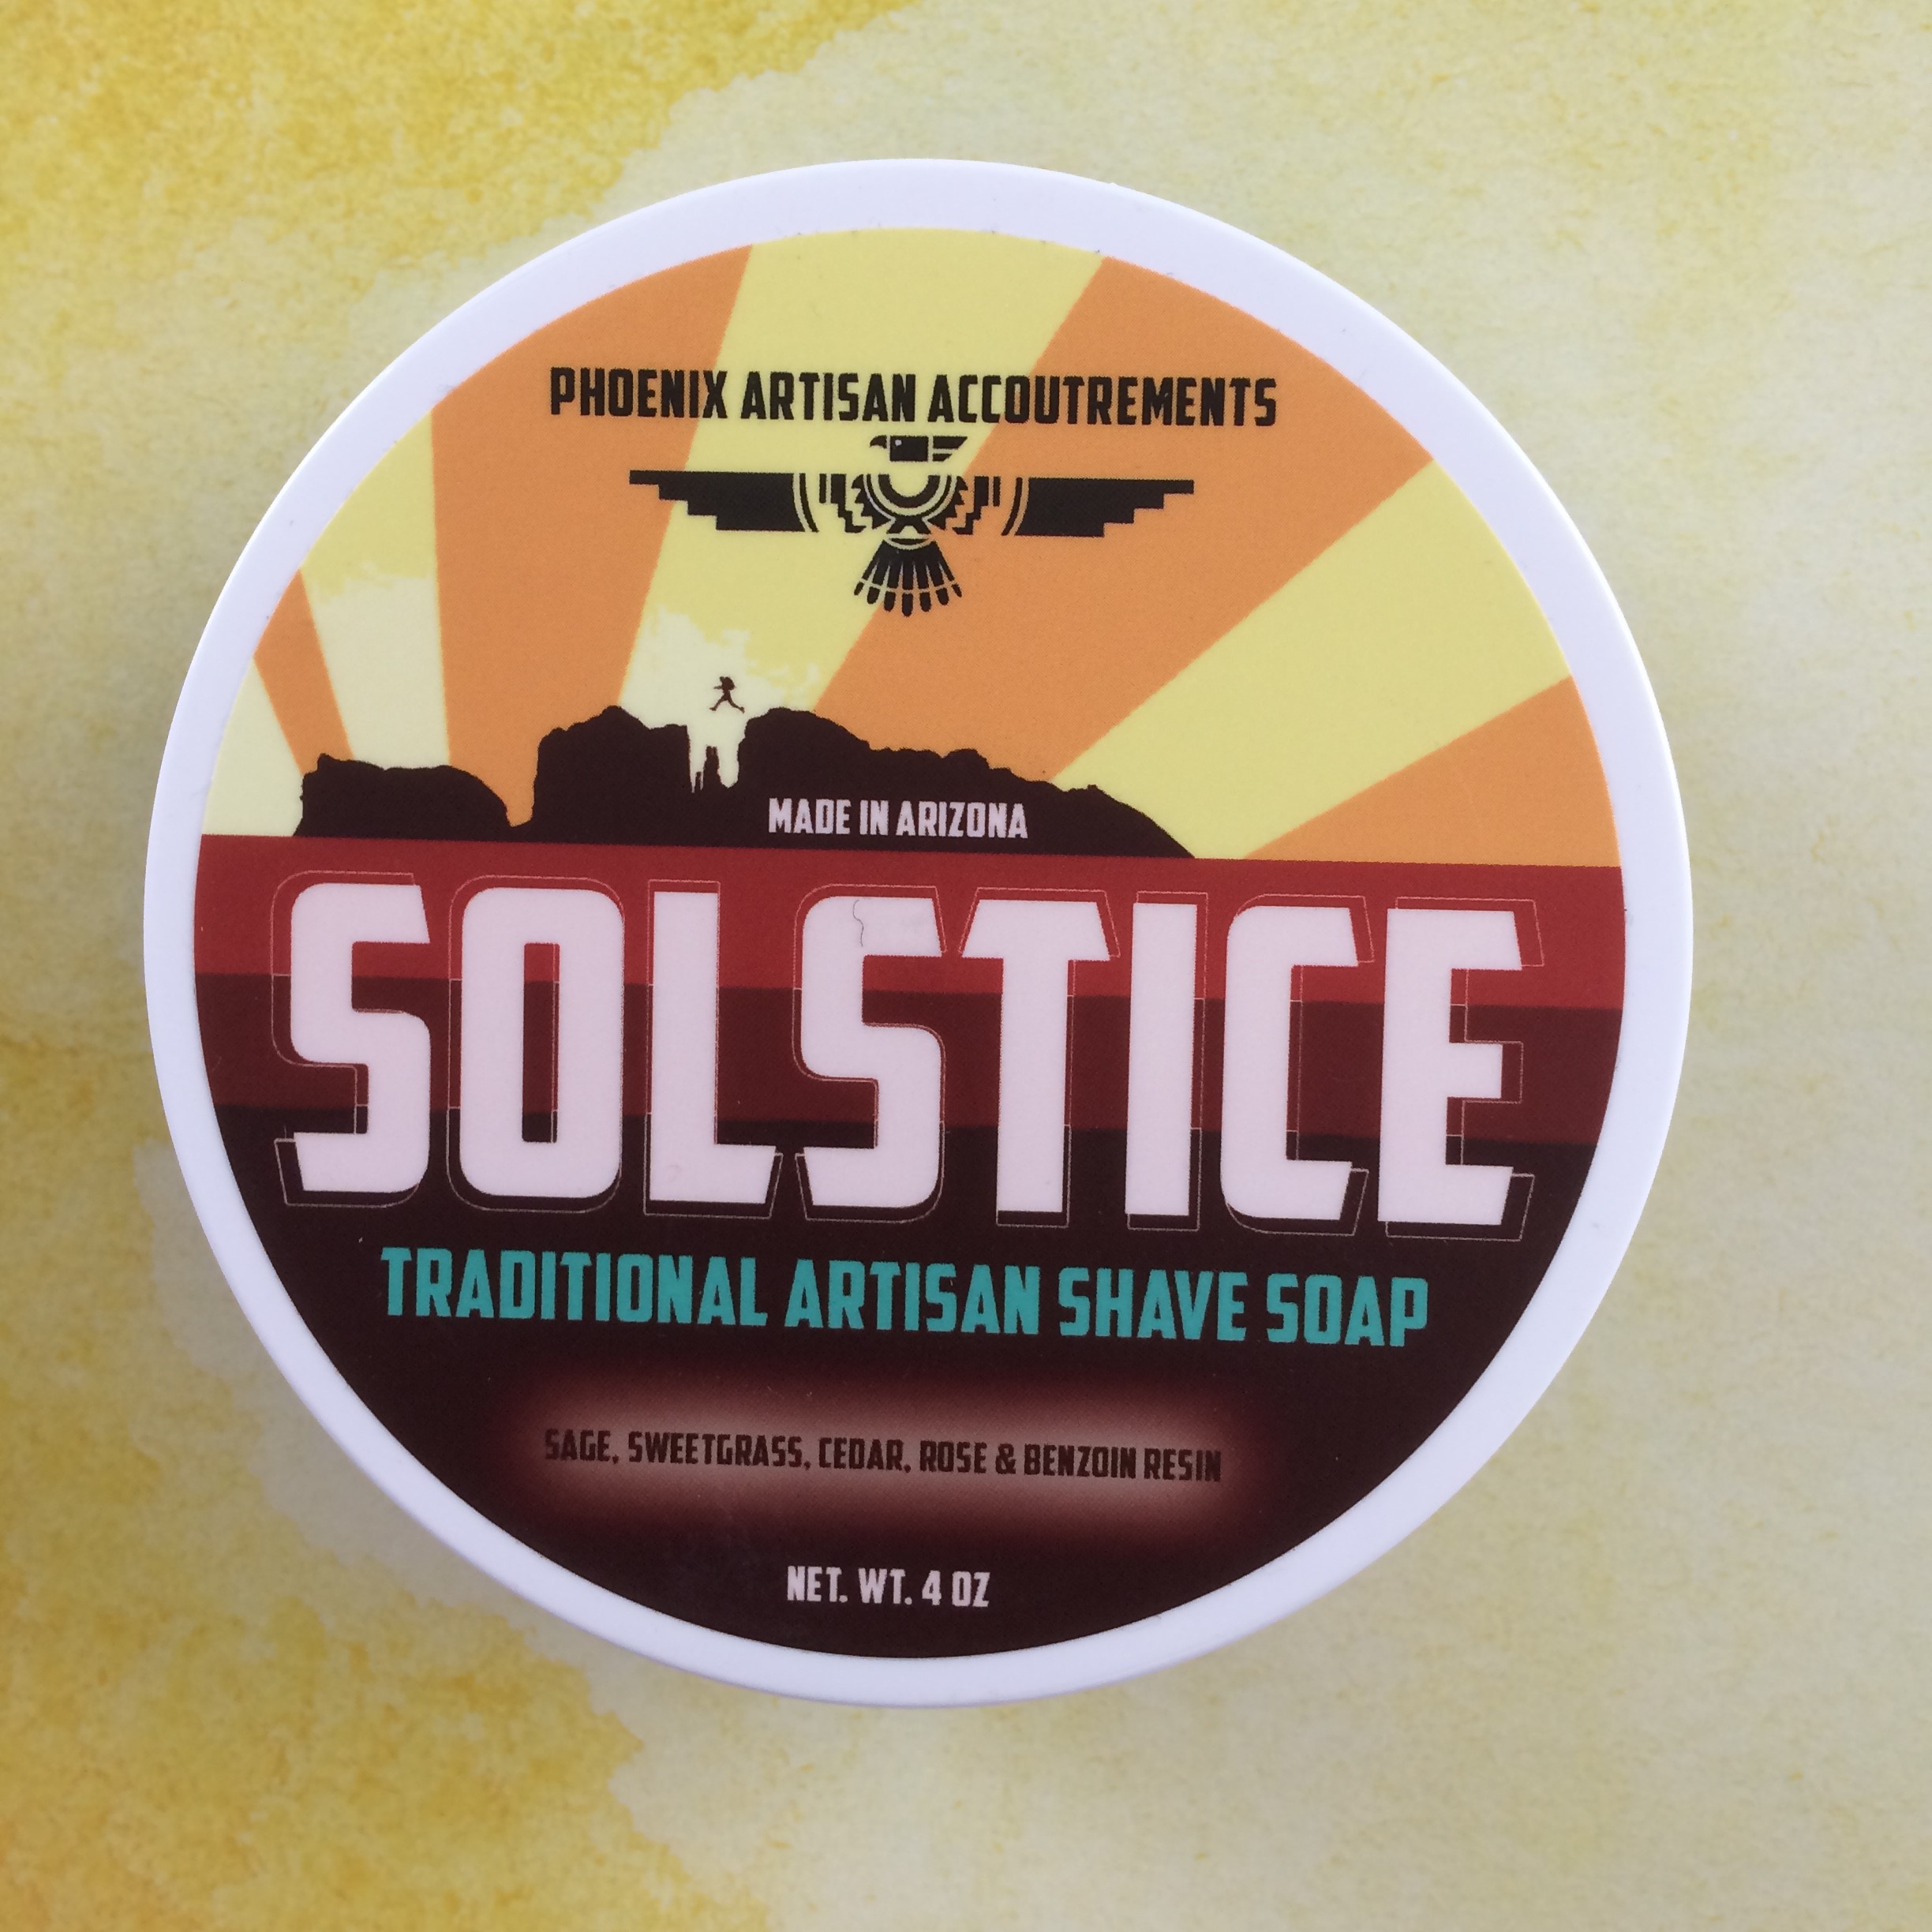 Phoenix Artisan Accoutrements Solstice Shaving Soap | Agent Shave